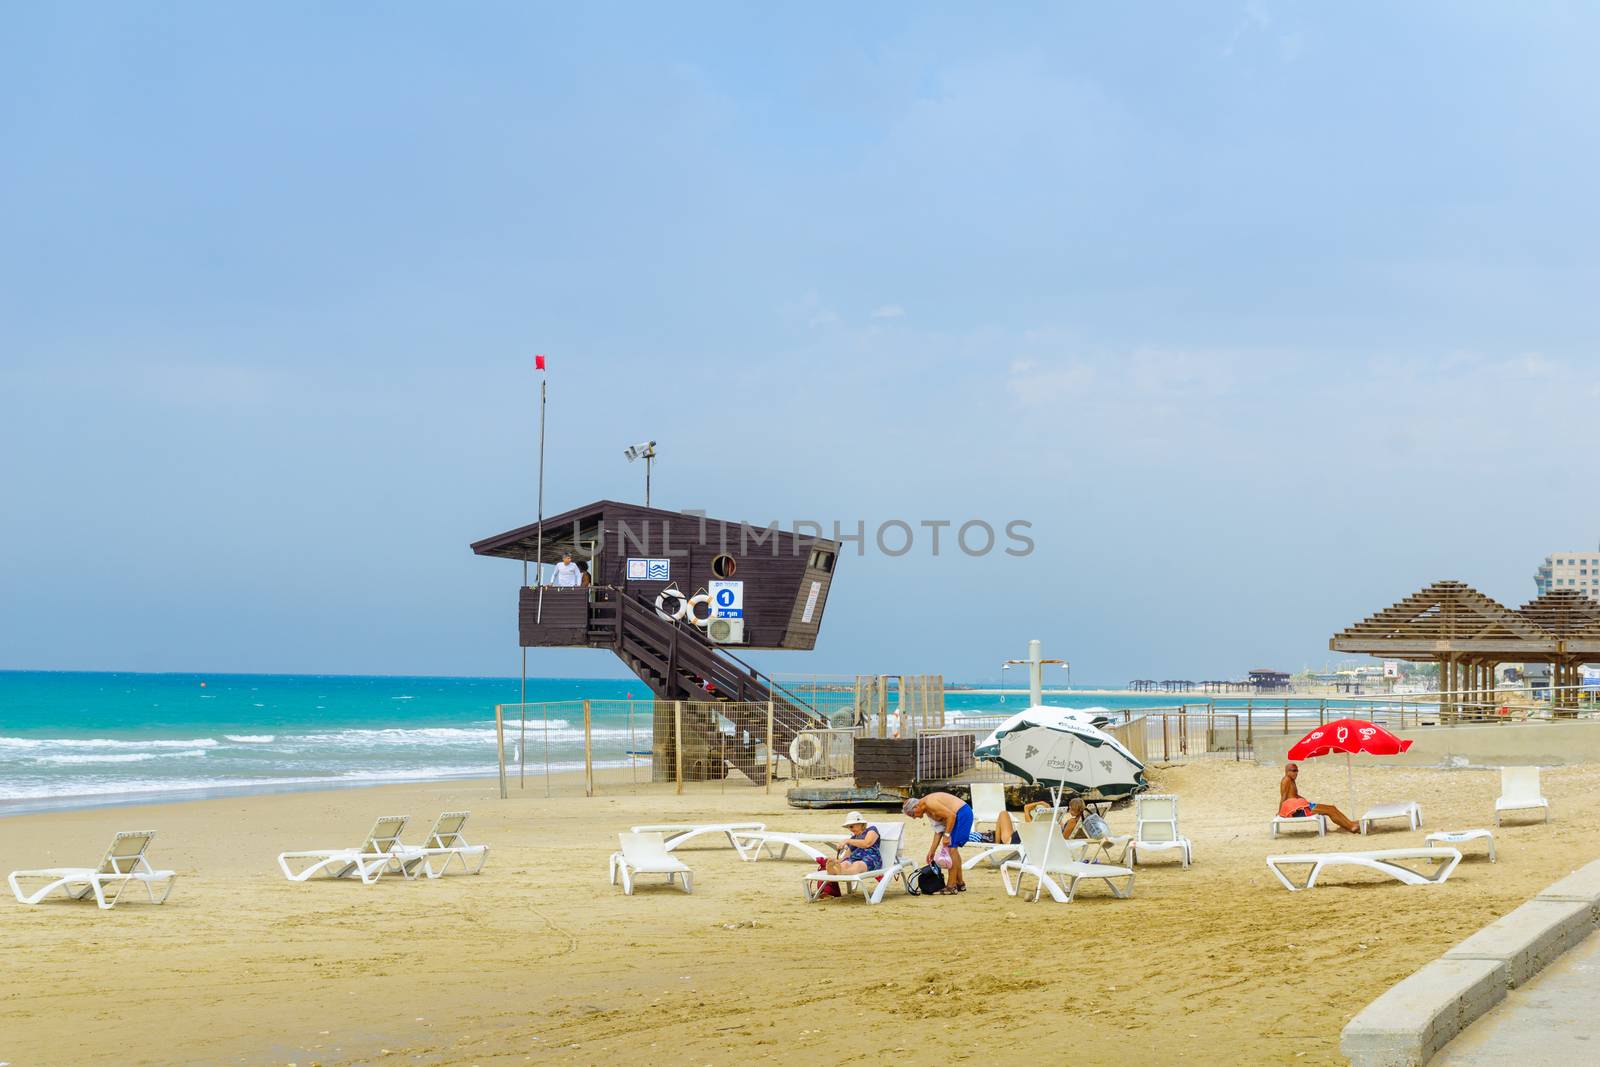 Beach promenade scene, Haifa by RnDmS